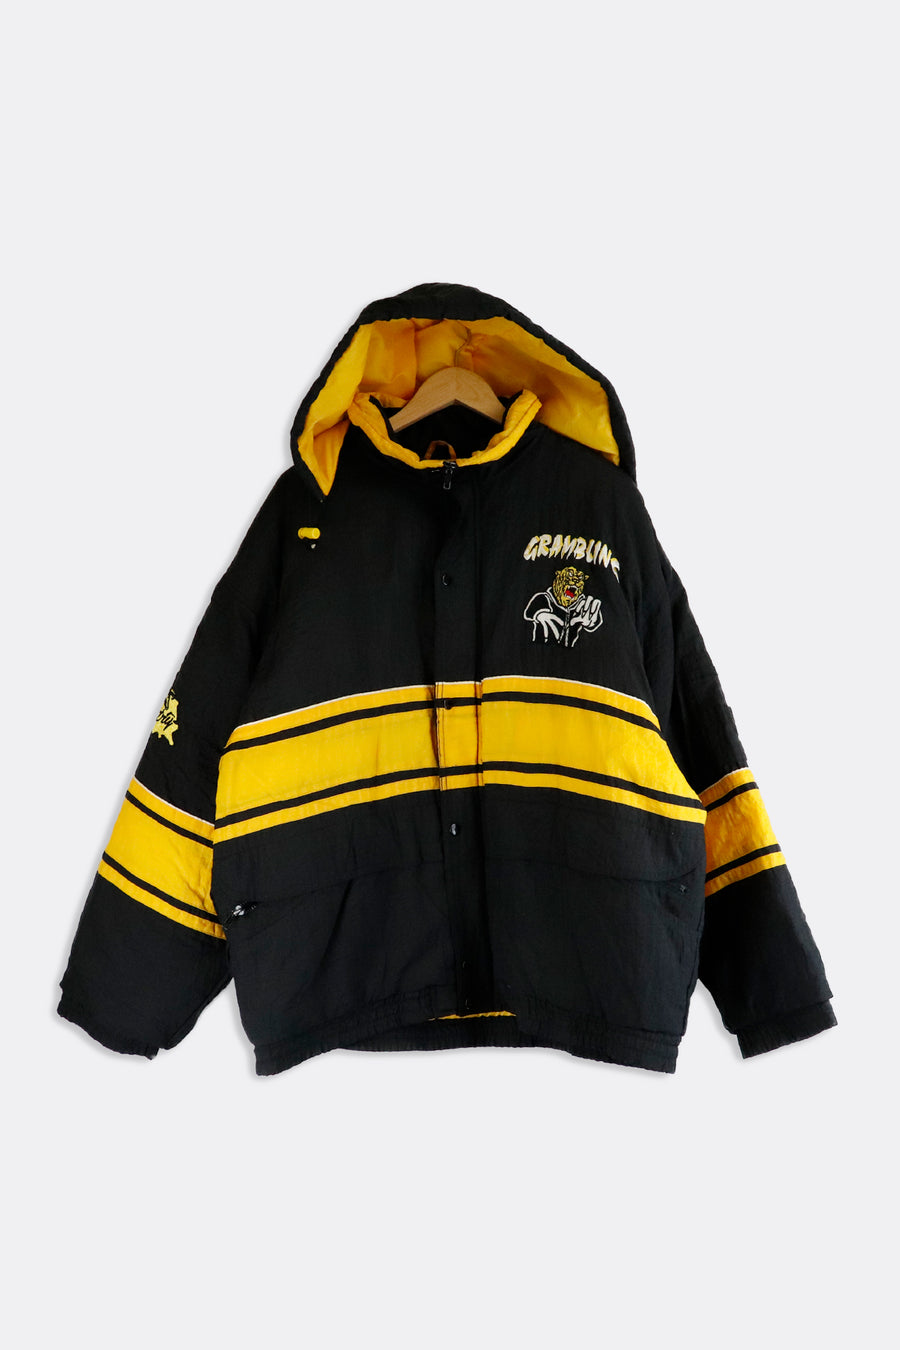 Vintage NCAA Grambling Tigers Winter Jacket Sz L